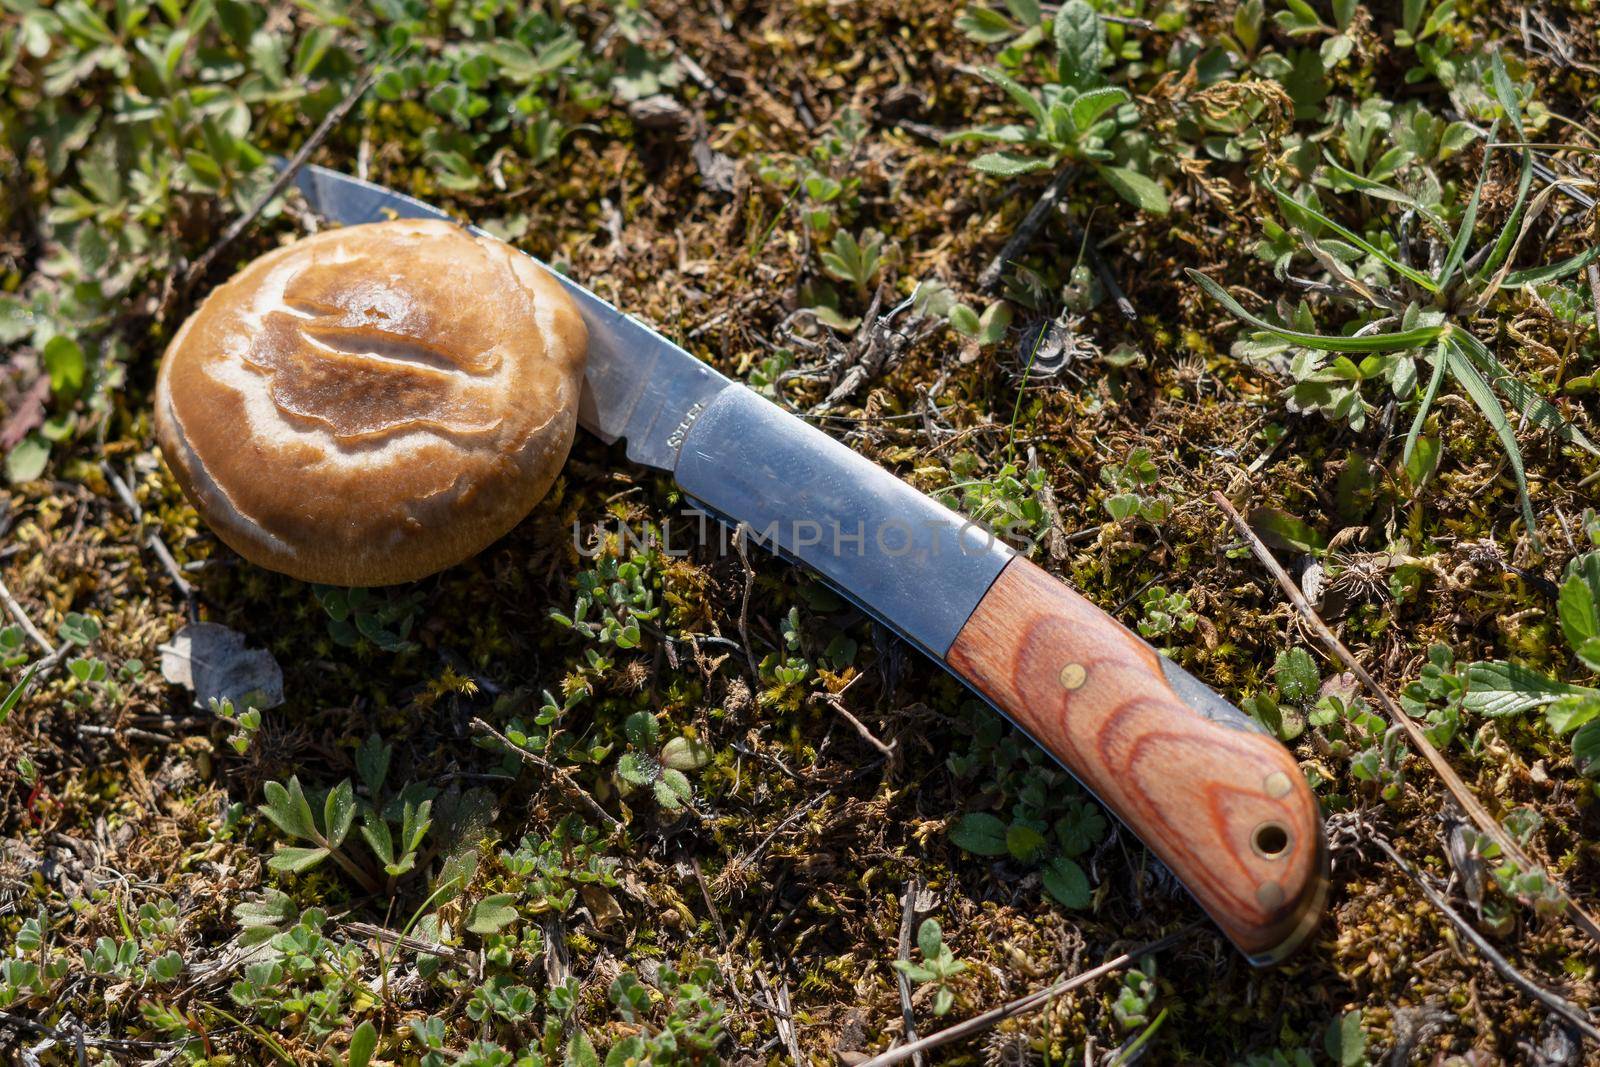 thistle mushroom pleurotus ostreatus in the field cut with a razor blade